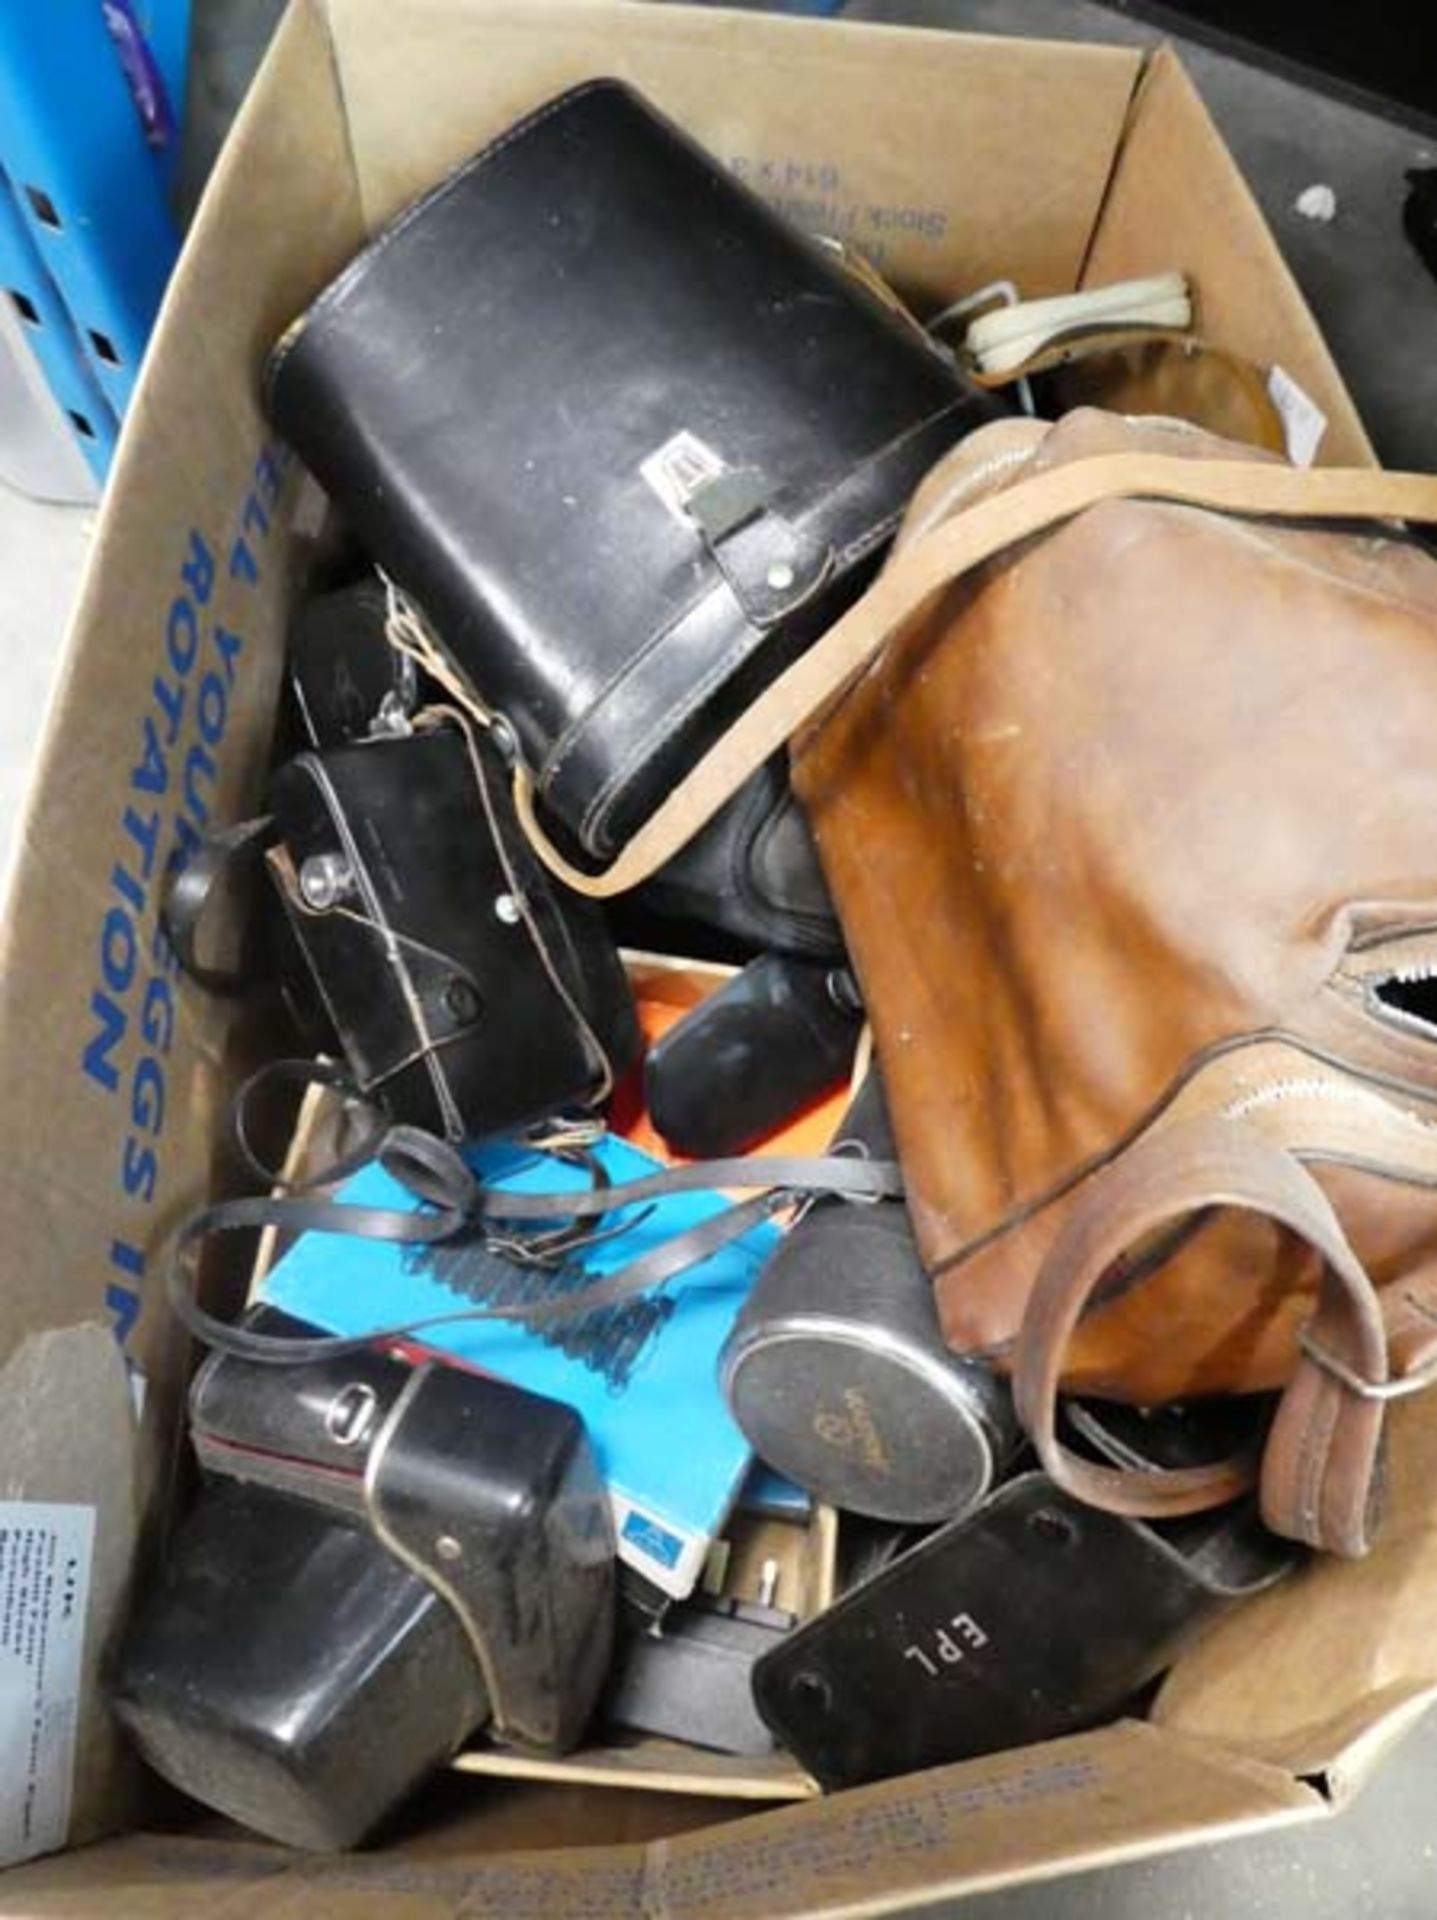 Bag containing a quantity of various optical equipment, cameras, lenses, binoculars, etc